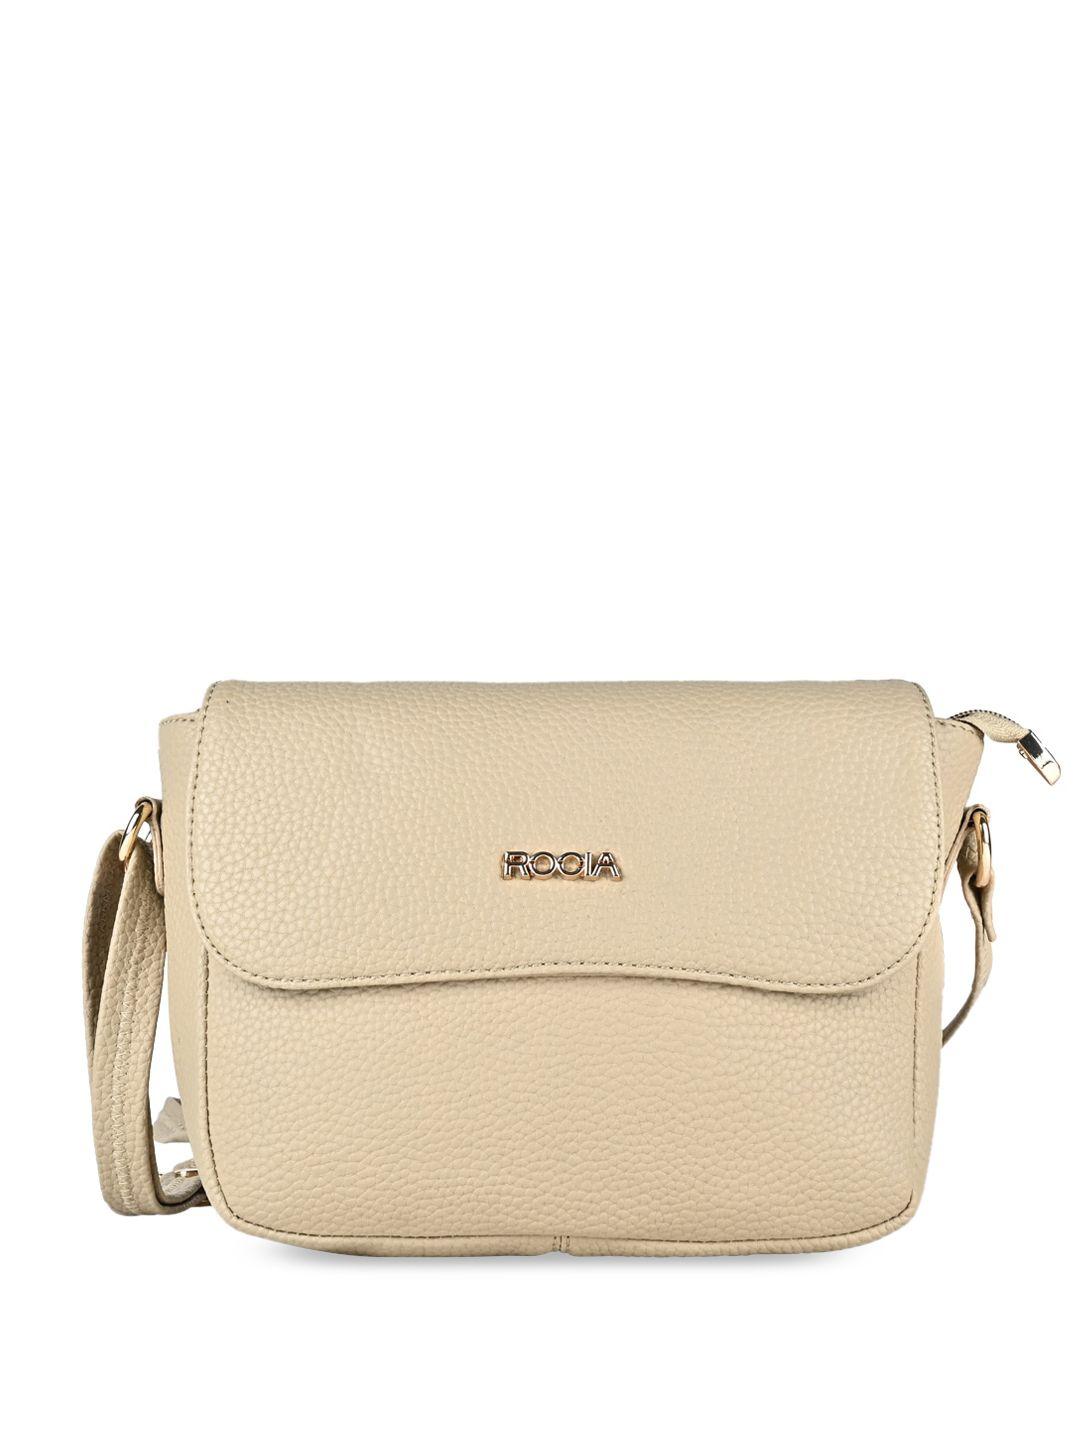 rocia beige textured structured sling bag